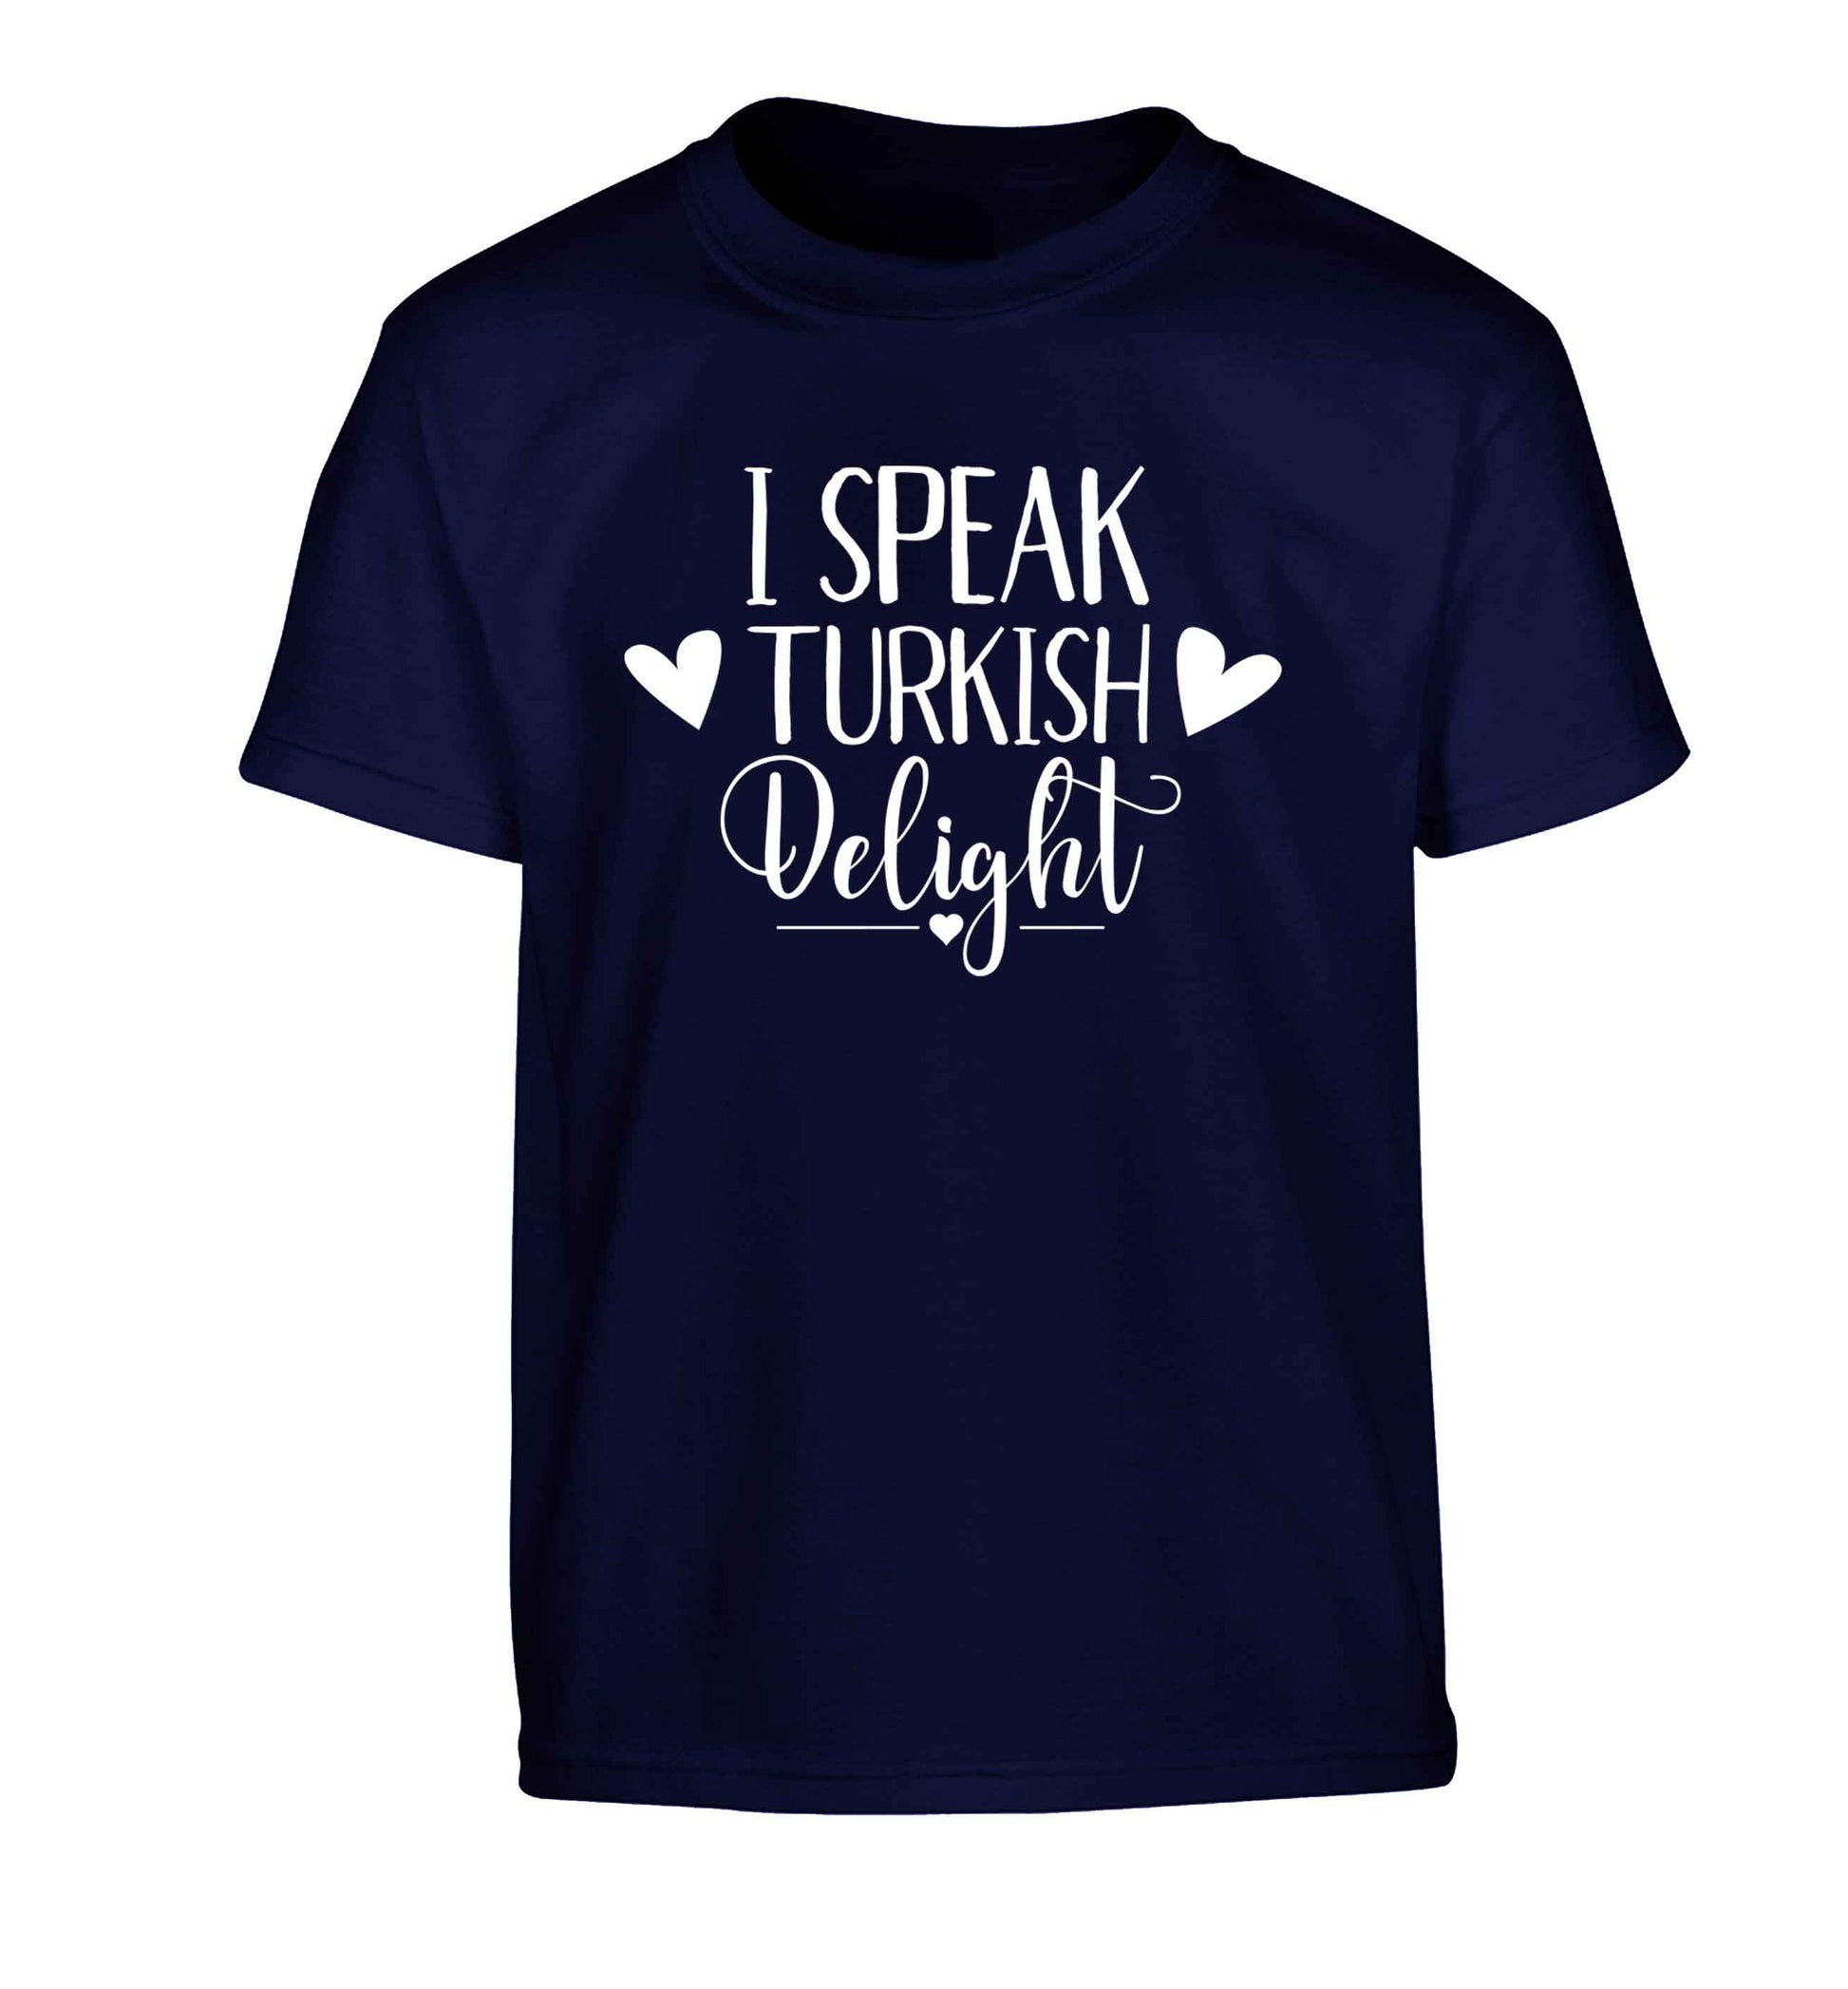 I speak turkish...delight Children's navy Tshirt 12-13 Years